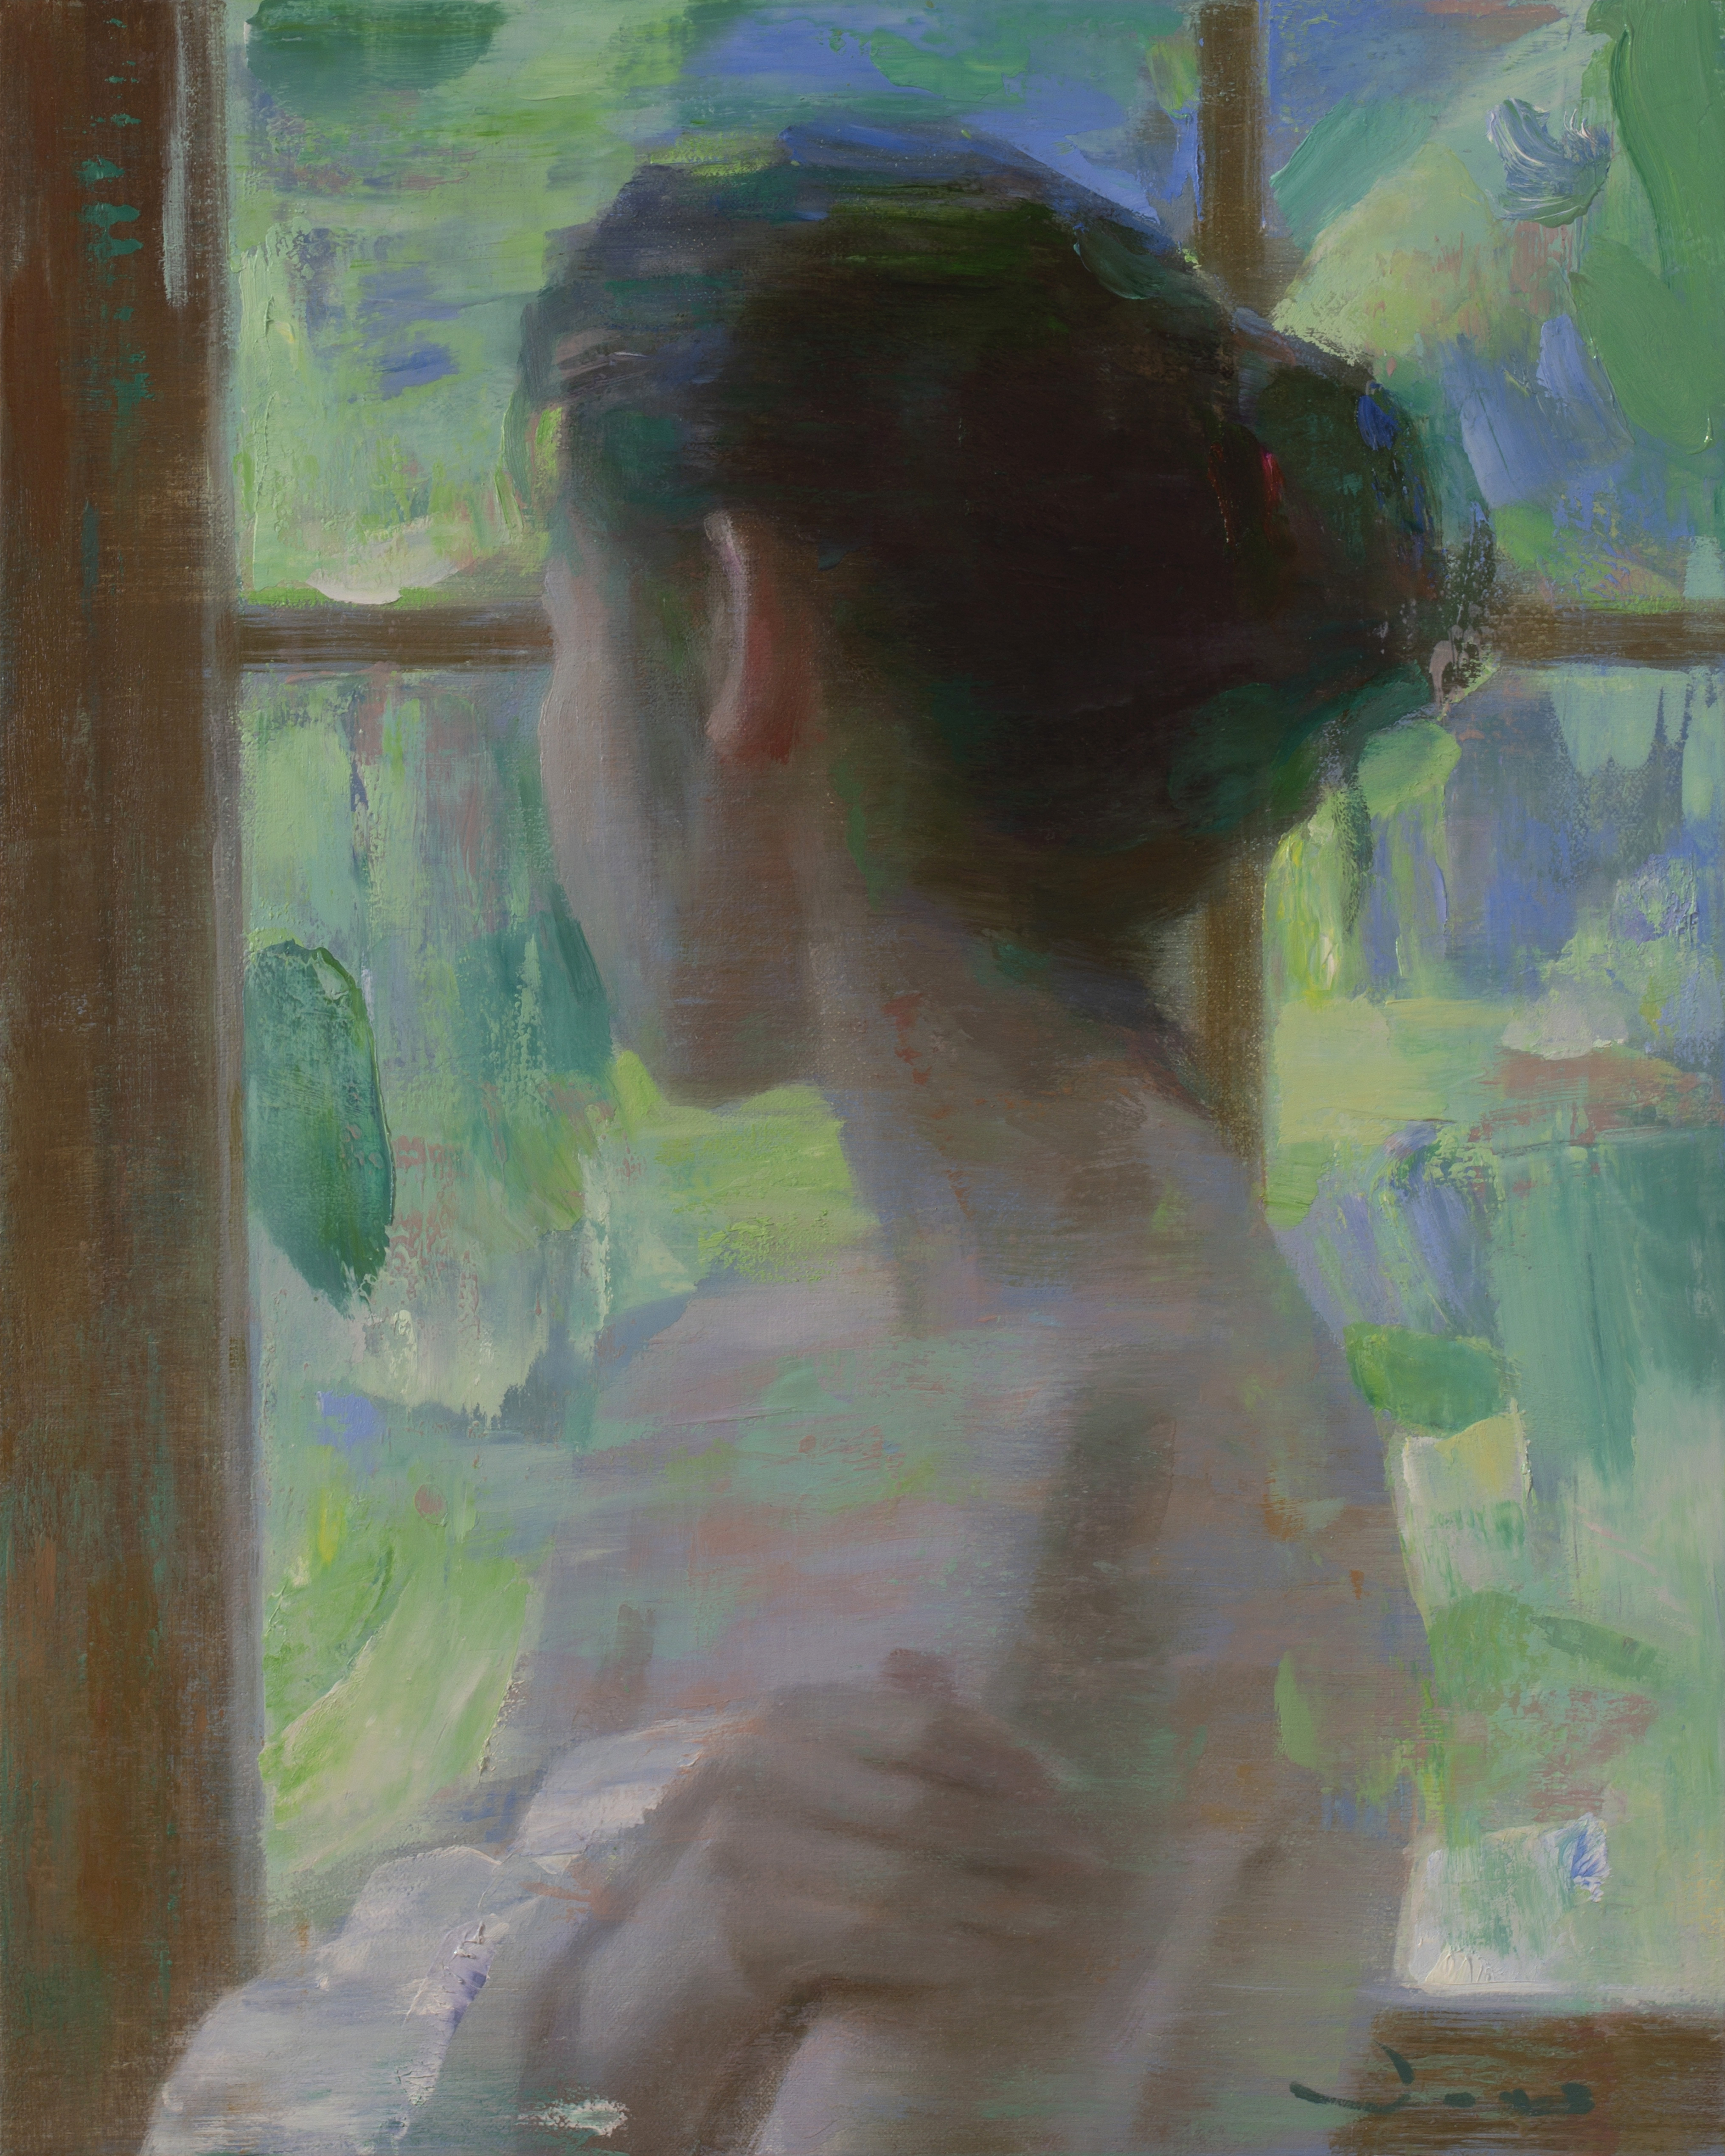 Xeus, Vincent, Chance with Monet, Oil on linen, 20×16